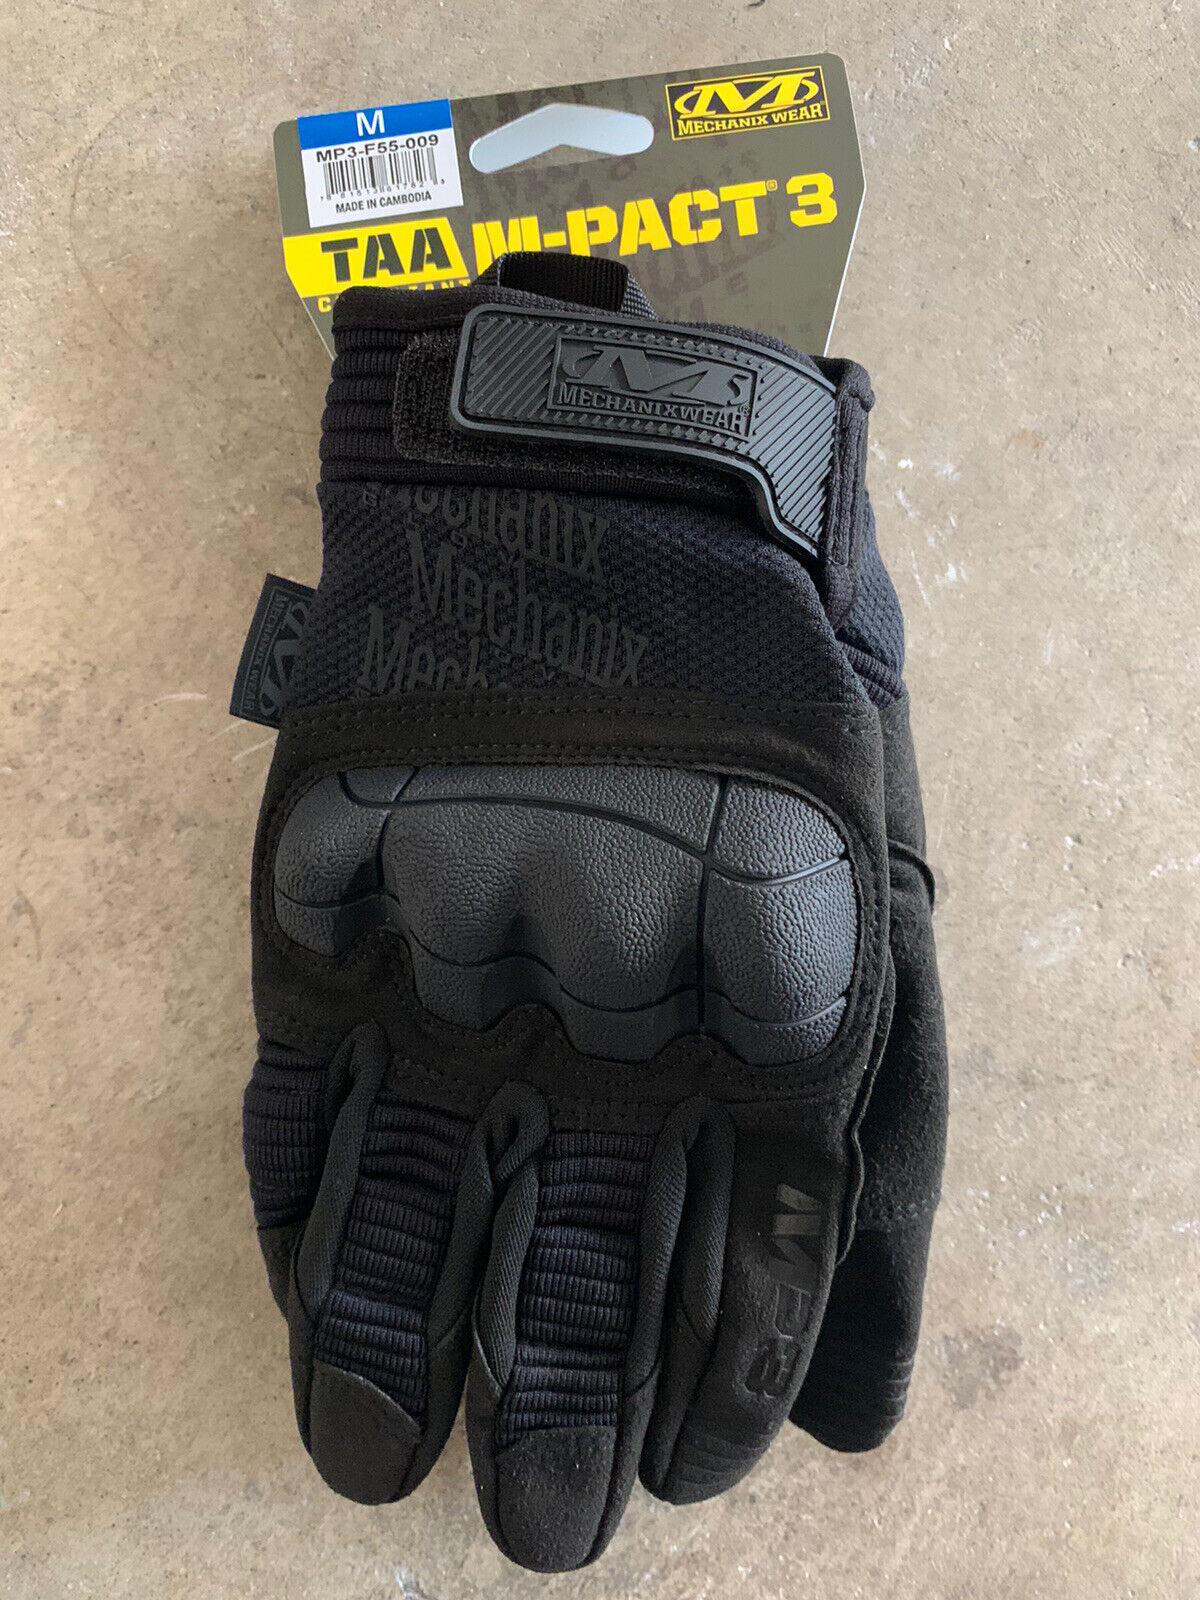 New Medium Mechanix  M-Pact 3 Covert Tactical Gloves Black.